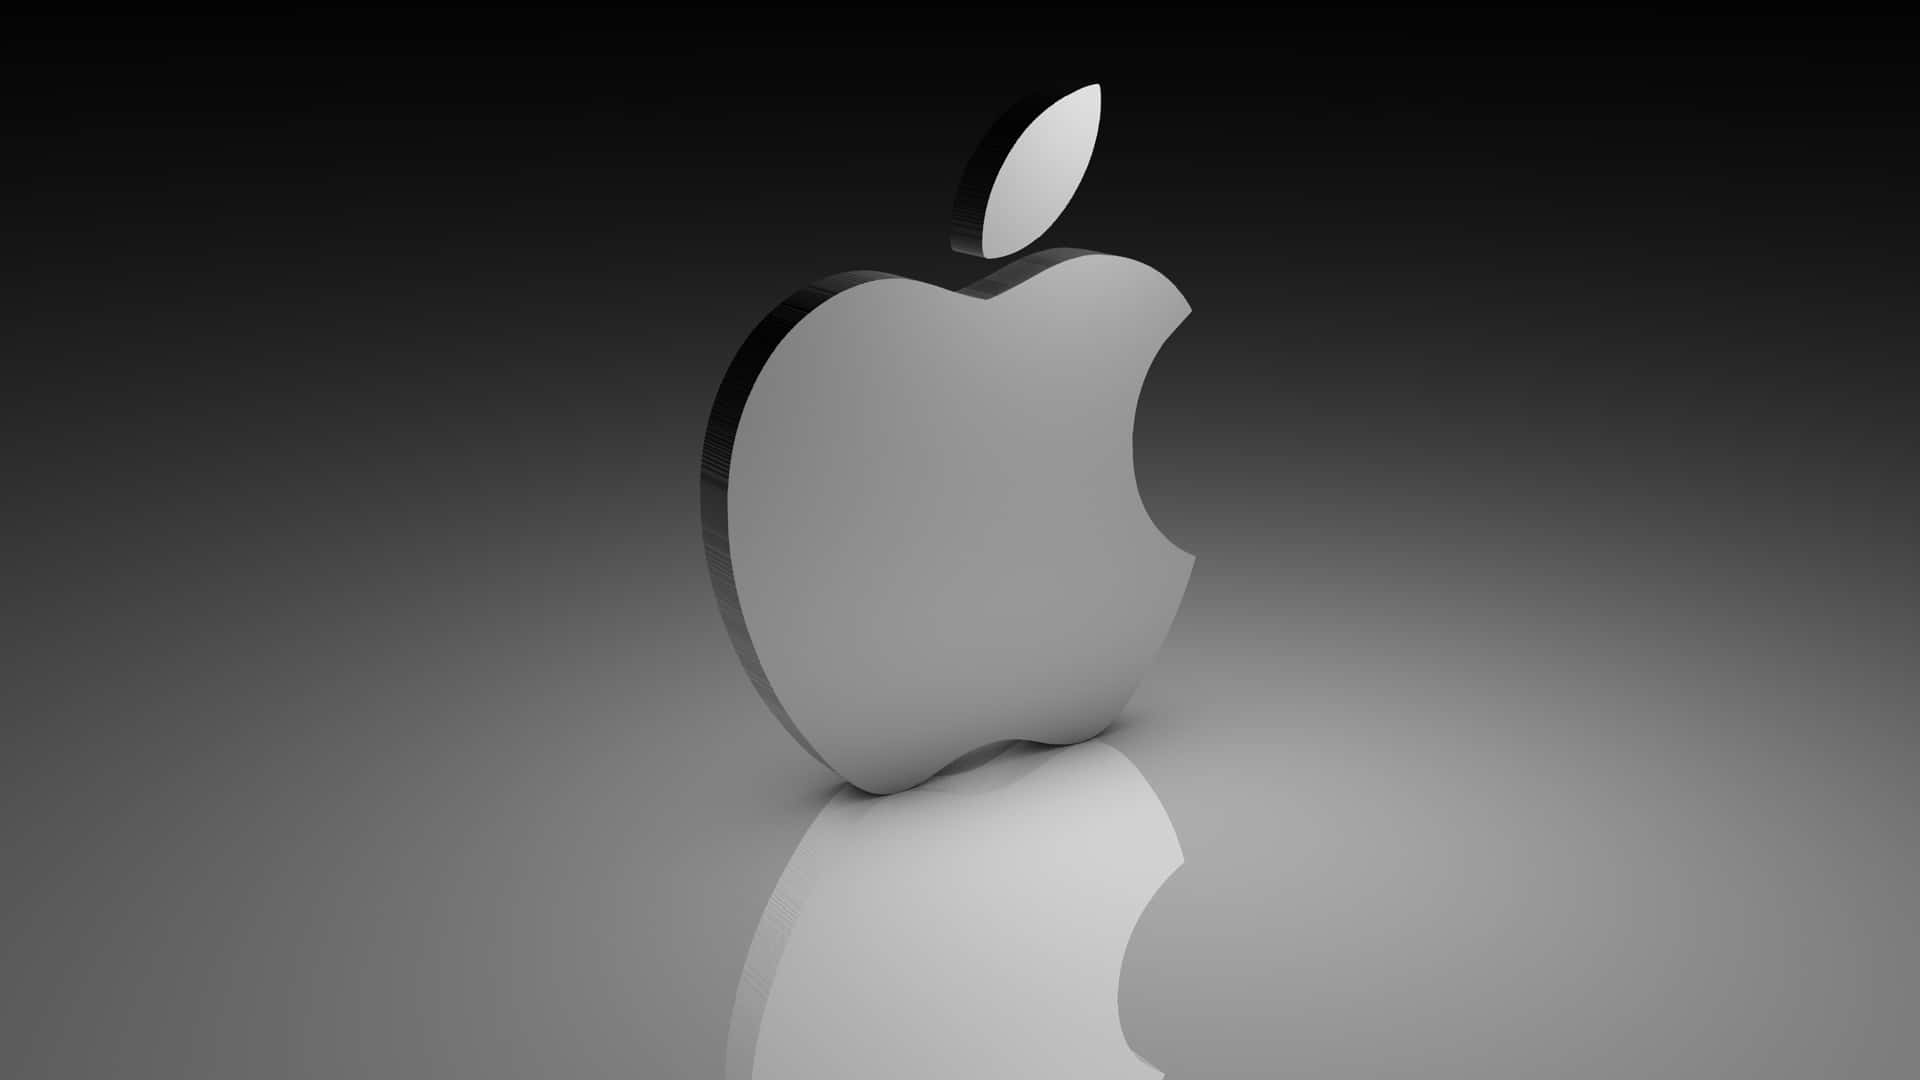 The logo of Apple in sleek black Wallpaper